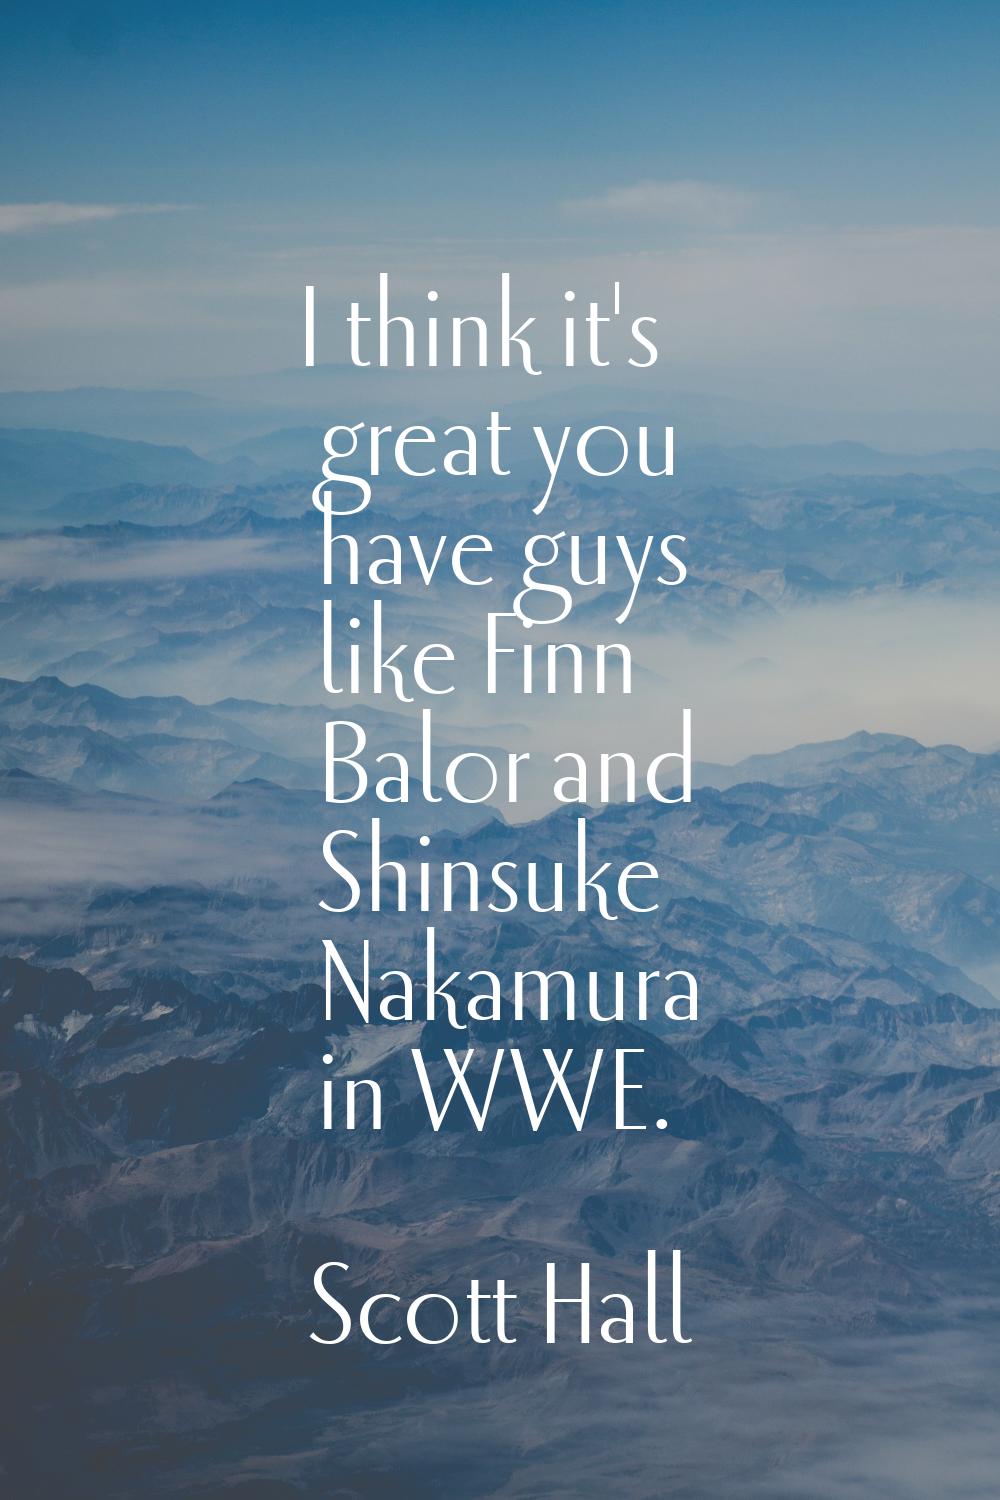 I think it's great you have guys like Finn Balor and Shinsuke Nakamura in WWE.